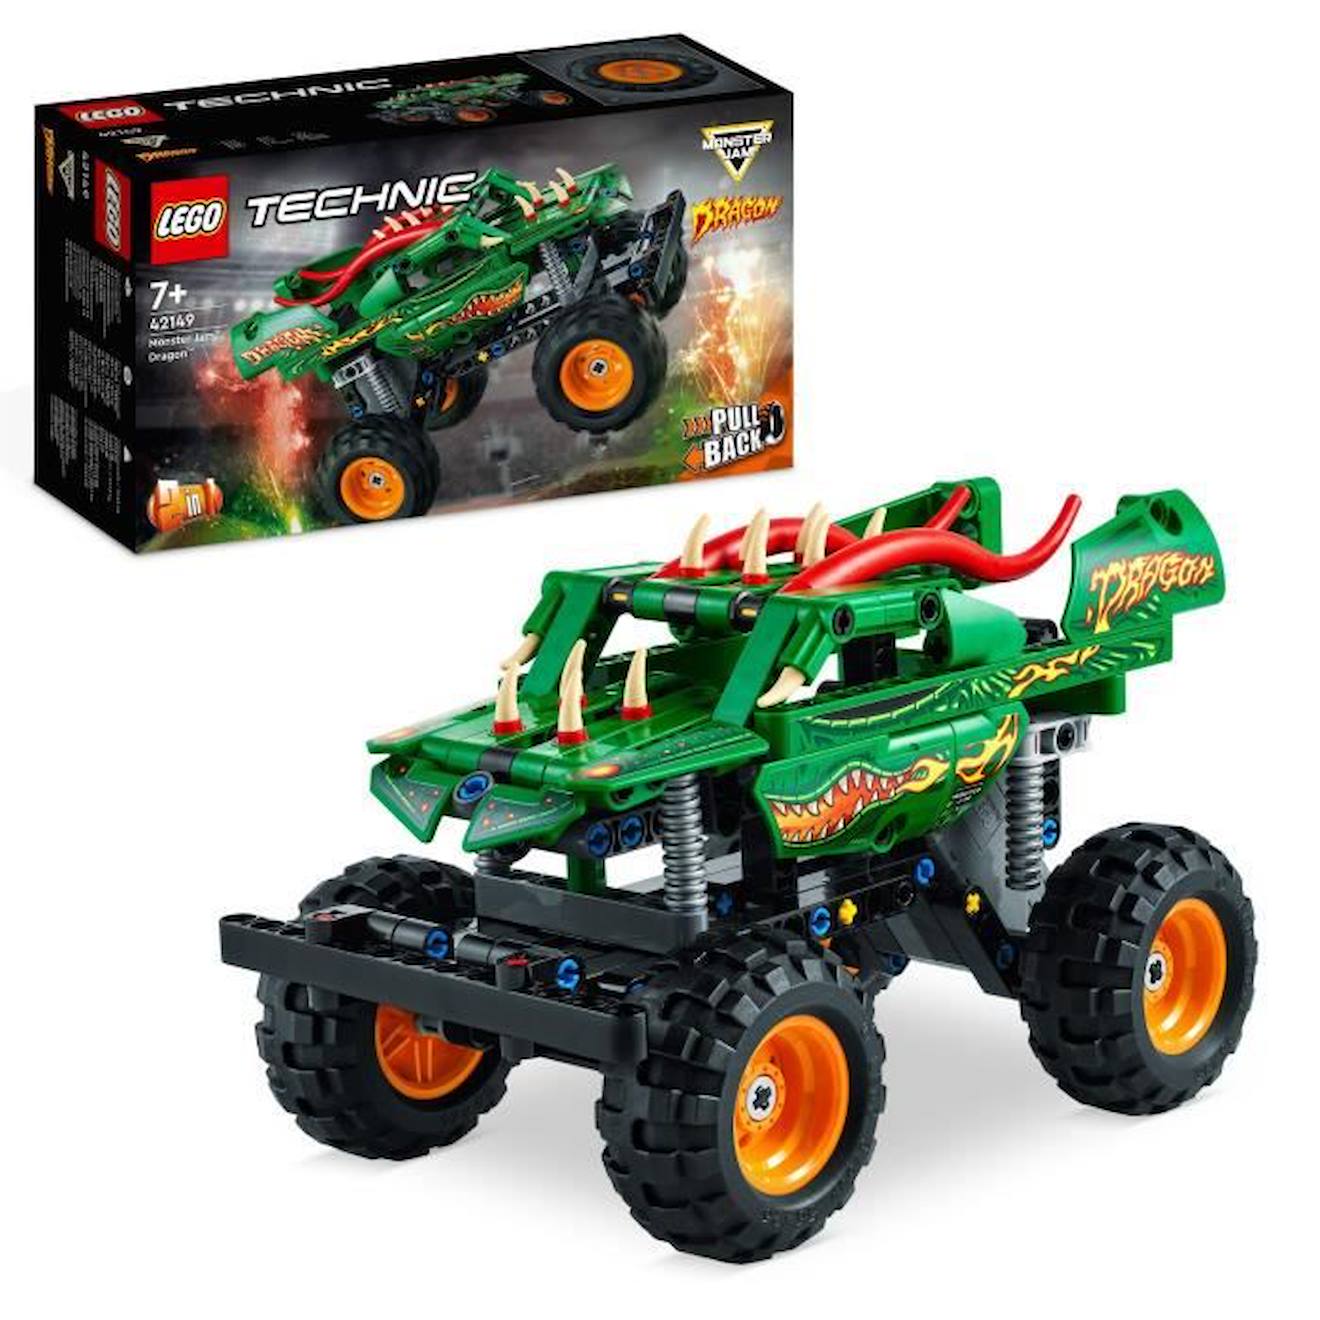 Lego® Technic 42149 Monster Jam Dragon, 2-en-1, Monster Truck Jouet, Voiture De Course Blanc